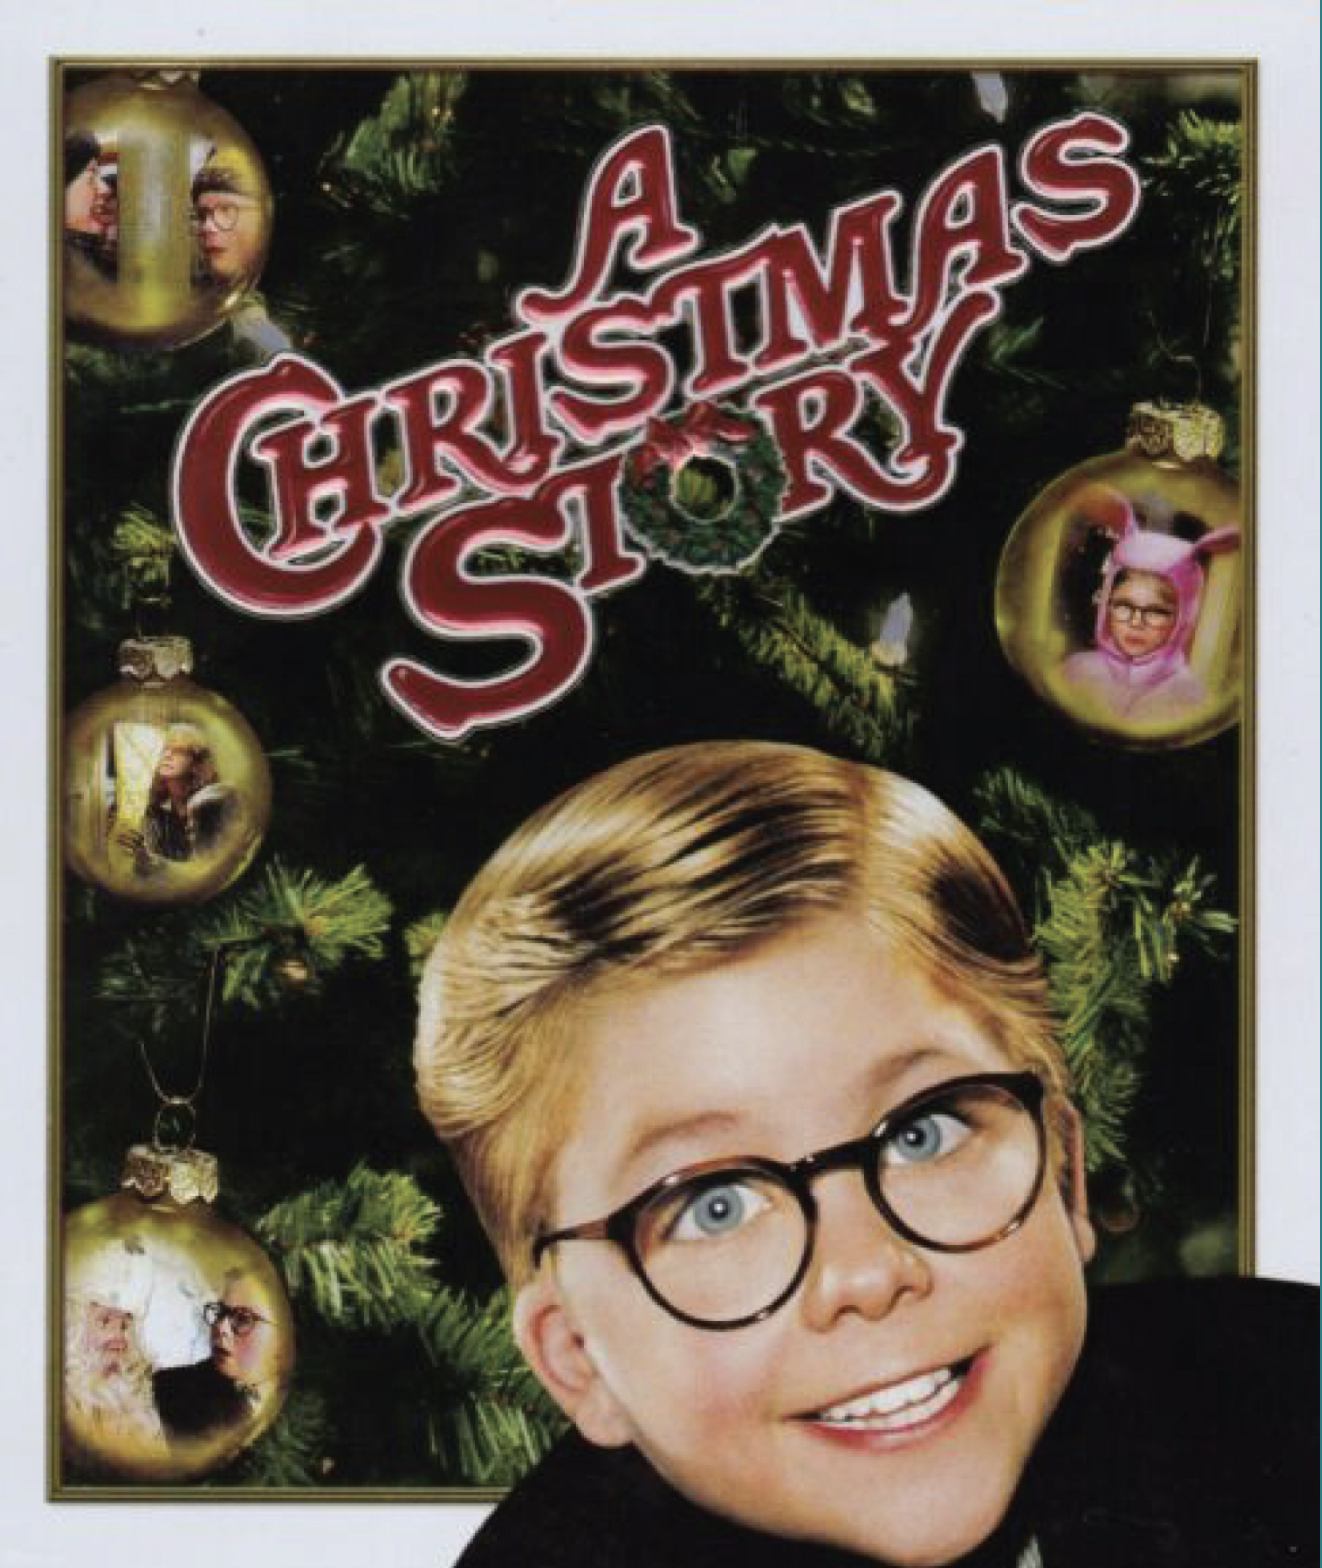 a christmas story 2 movie poster